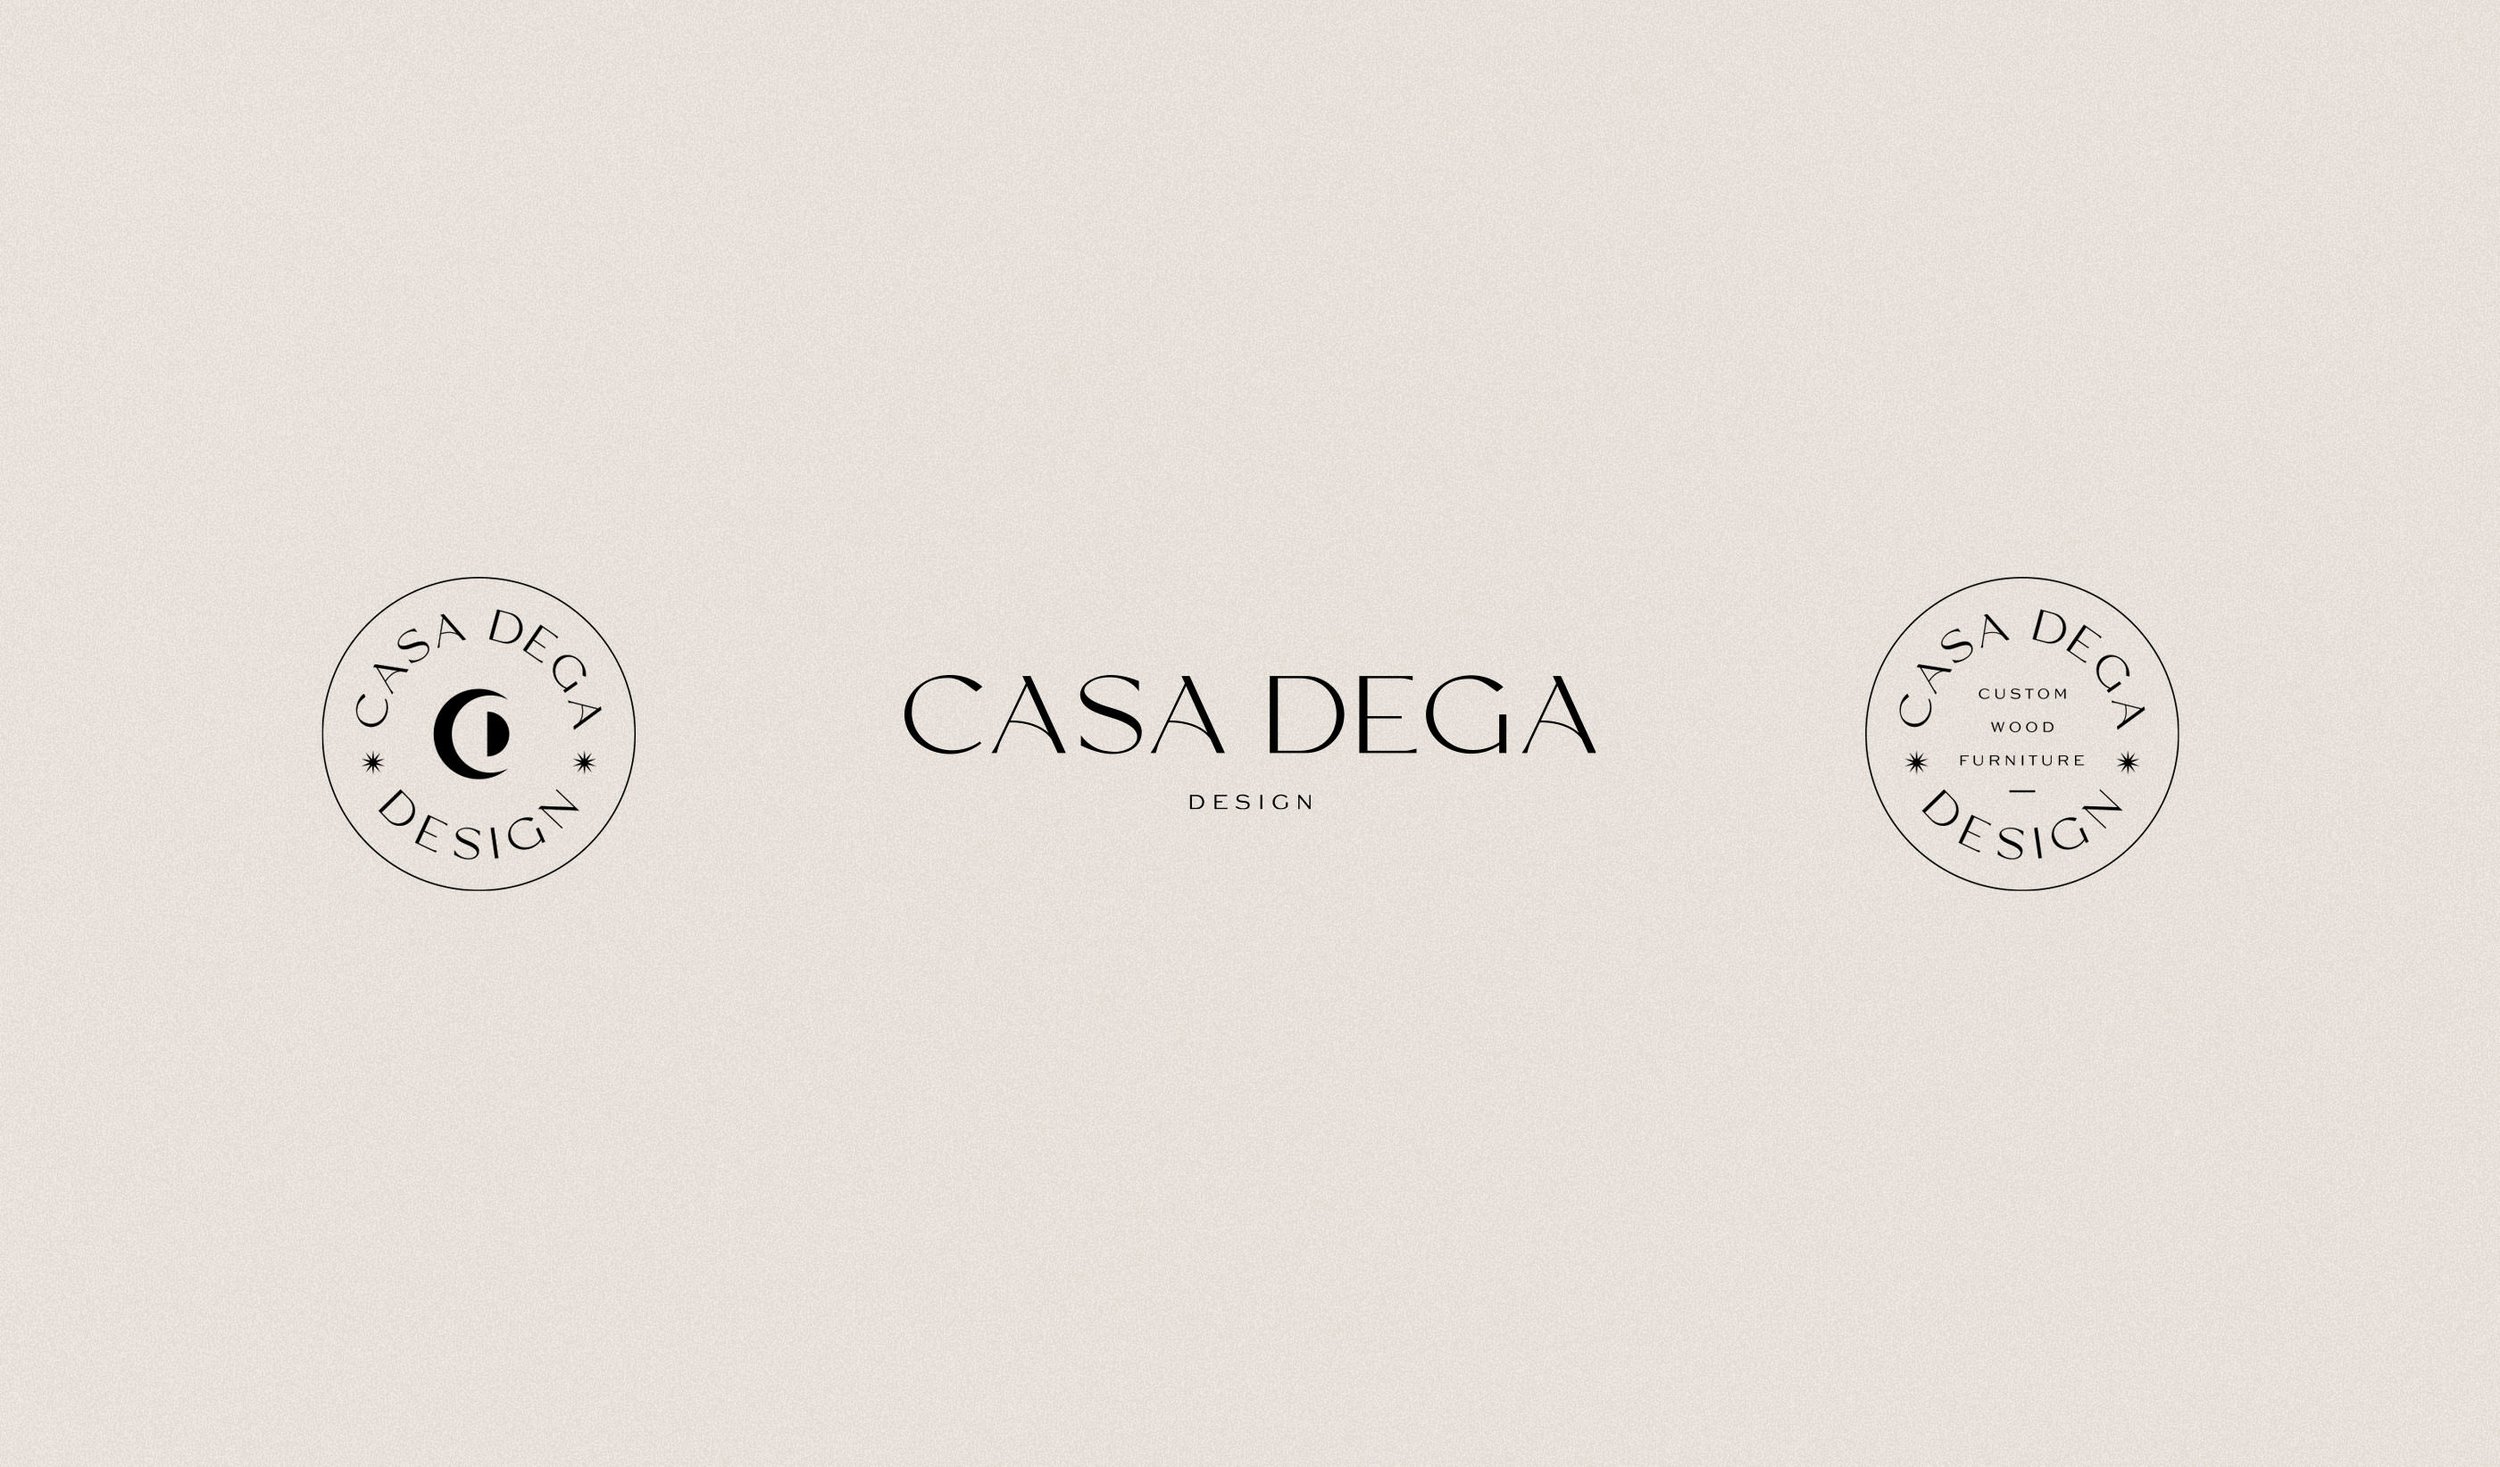 3 Casa Dega logos on a beige background